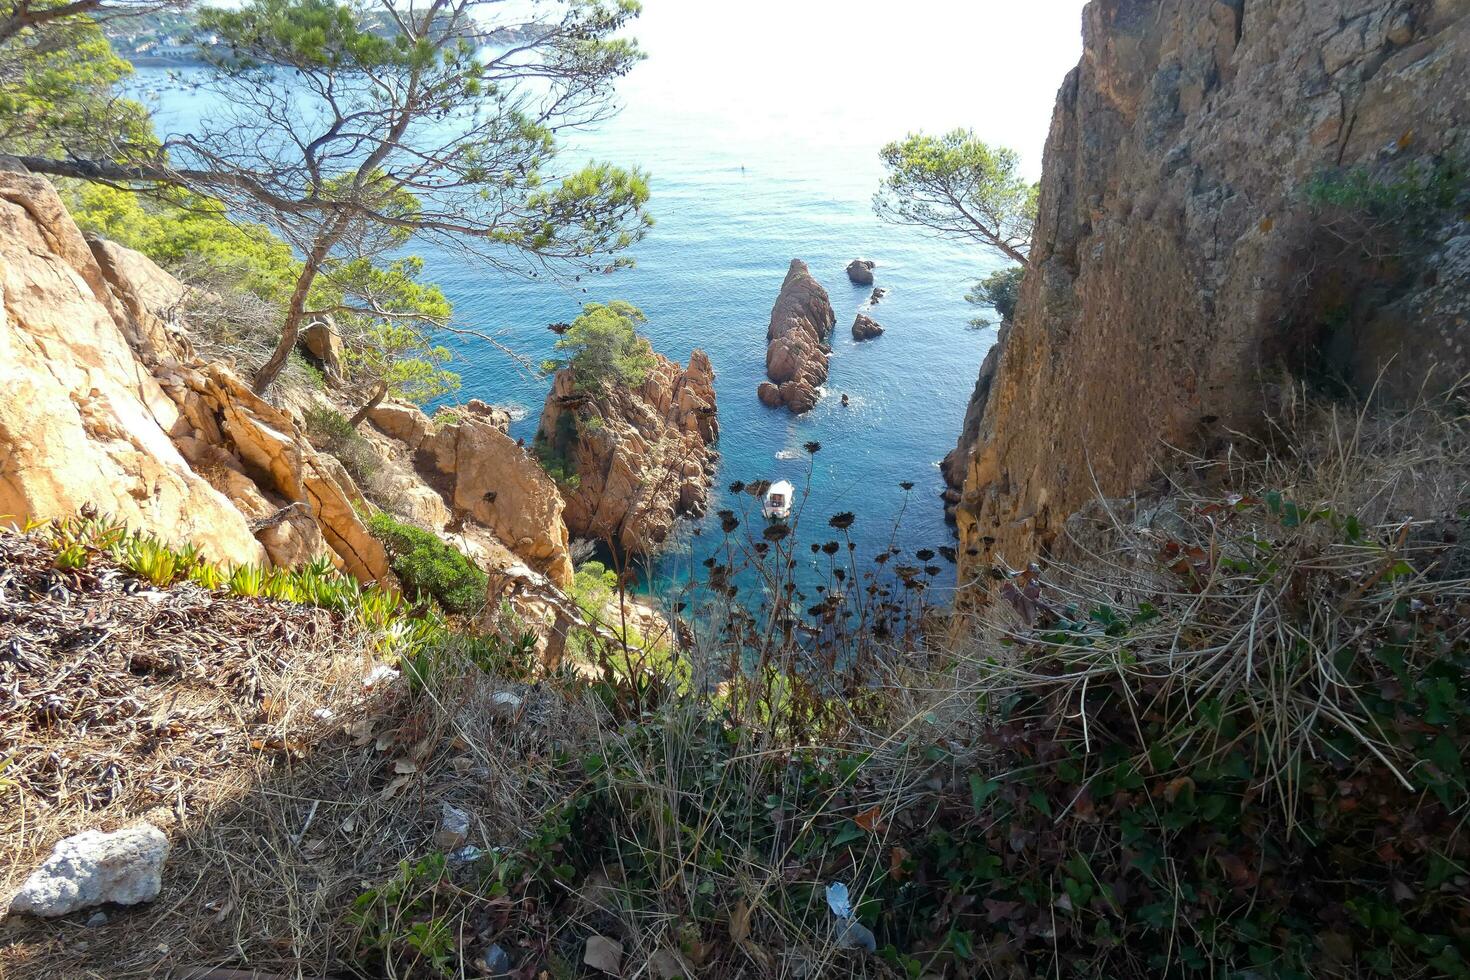 Costa brava and coastal path along the rugged coastline of northern catalonia, Spain photo